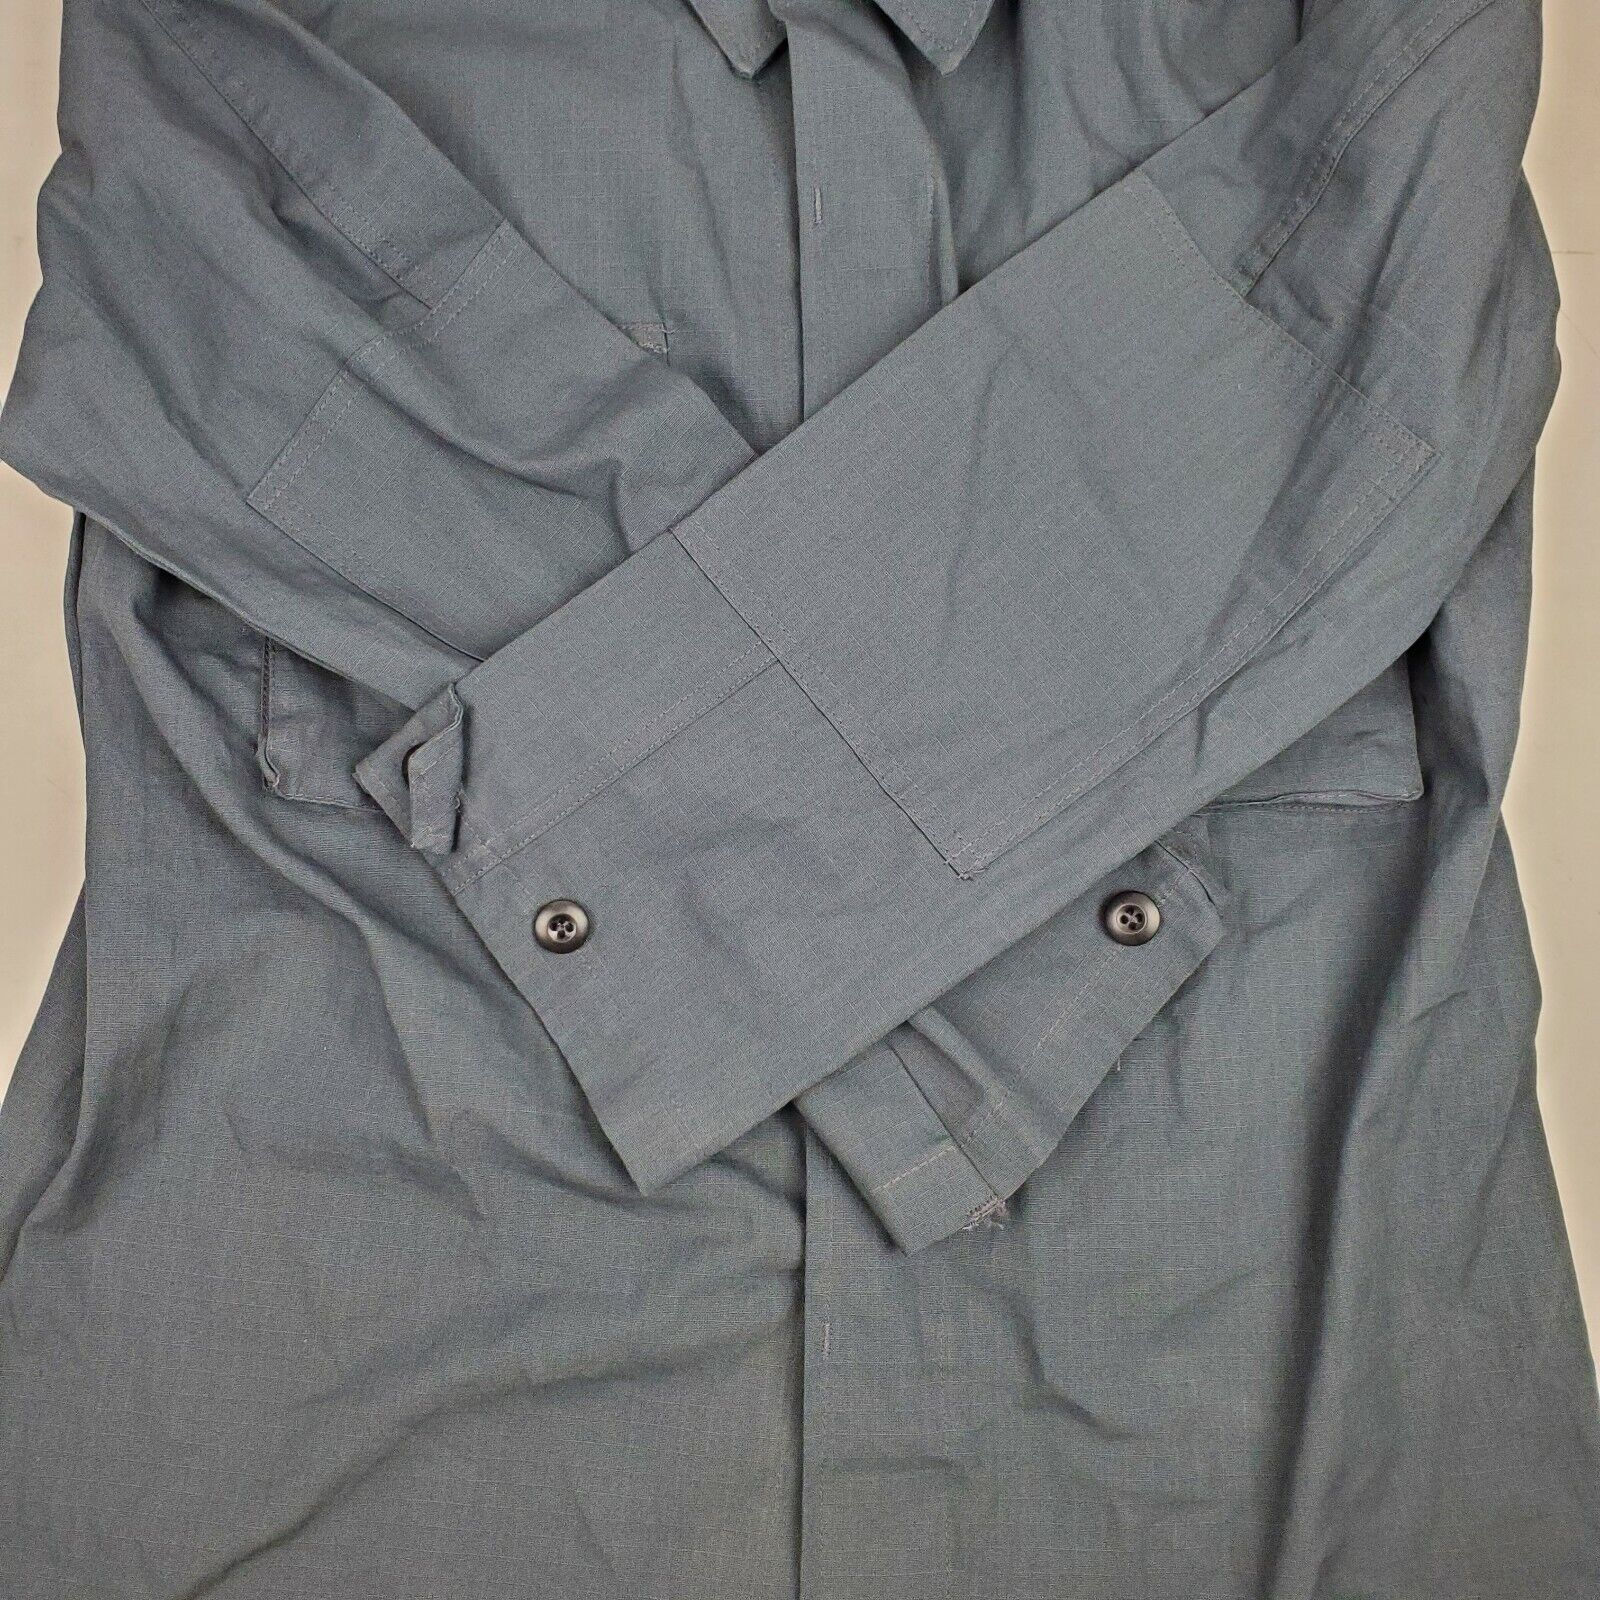 NWOT Military Tactical Shirt Grey Combat Coat Sz Medium Regular Long Sleeve USA Без бренда - фотография #2